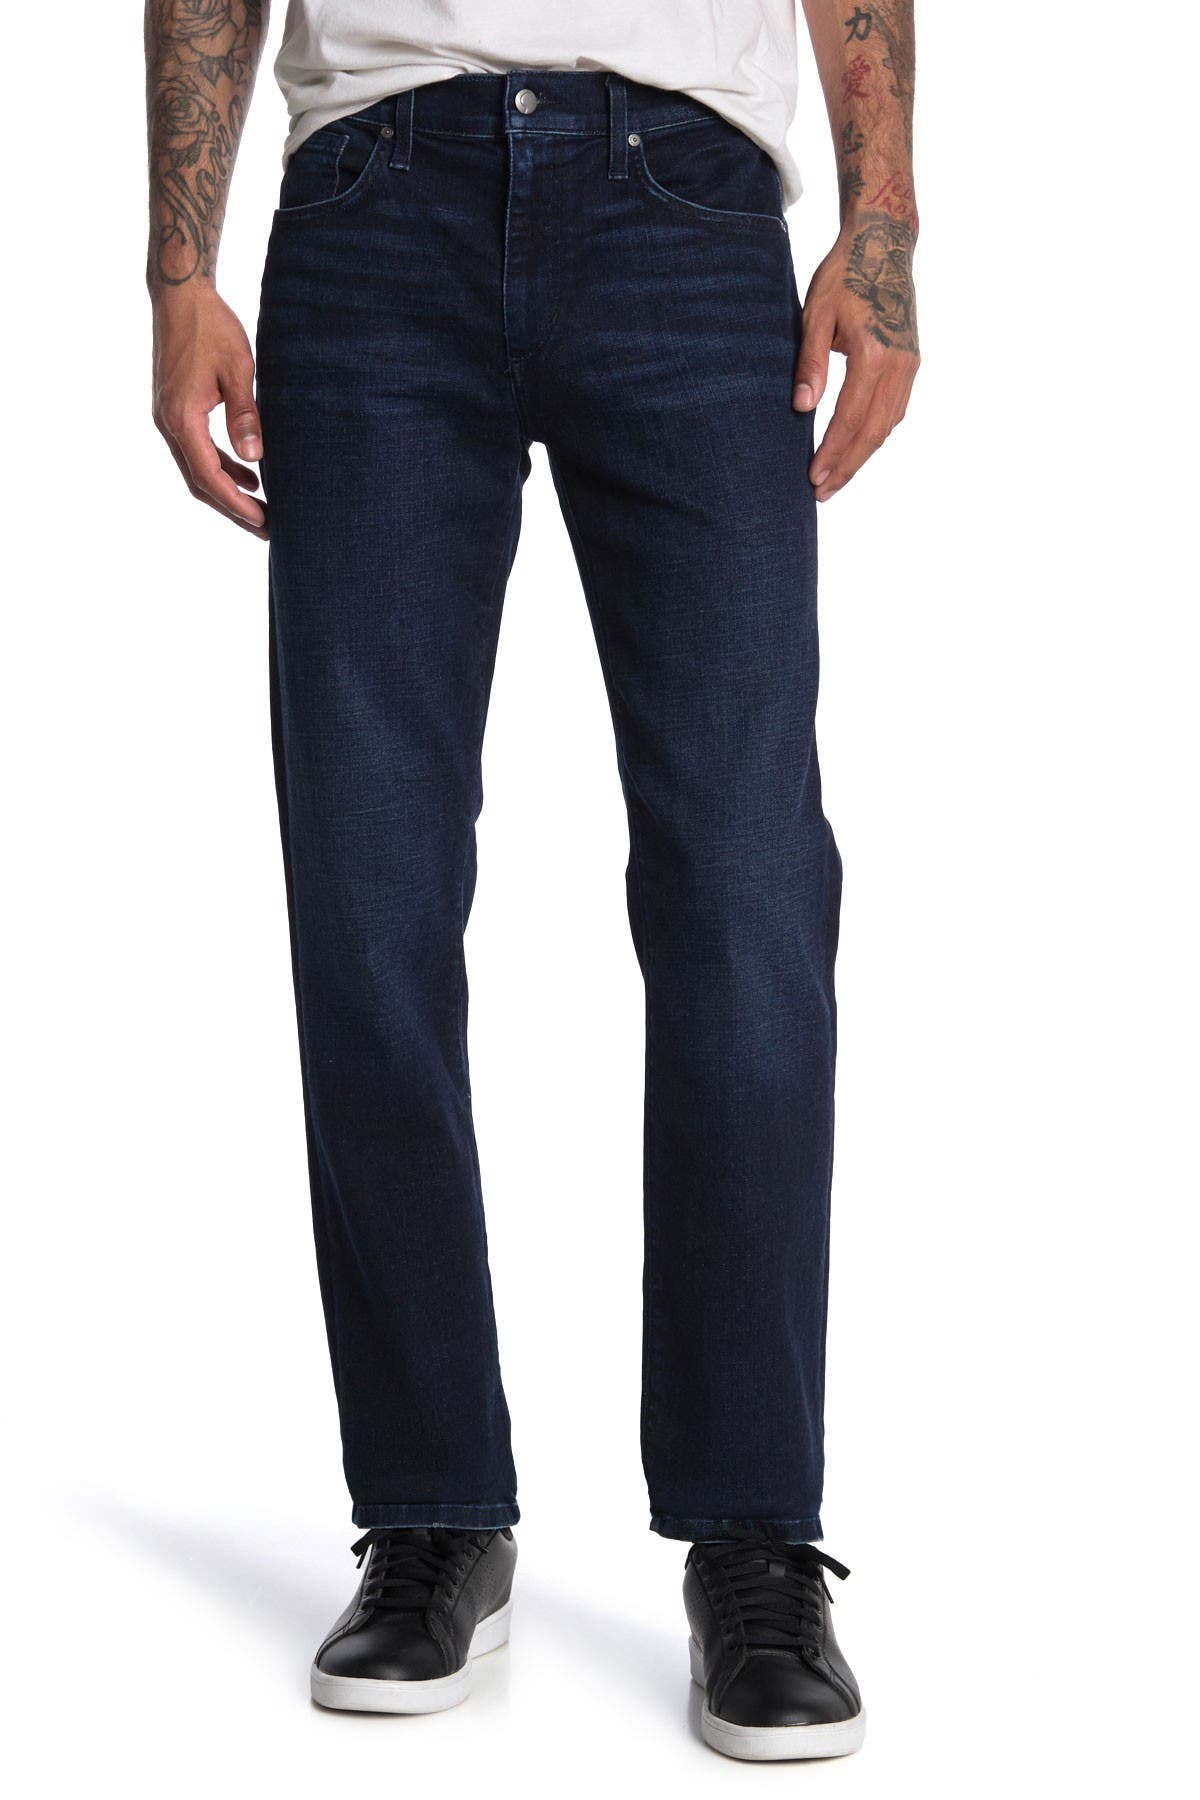 Joe's Jeans The Classic Straight Leg Jeans in Jenson Size 34 $219